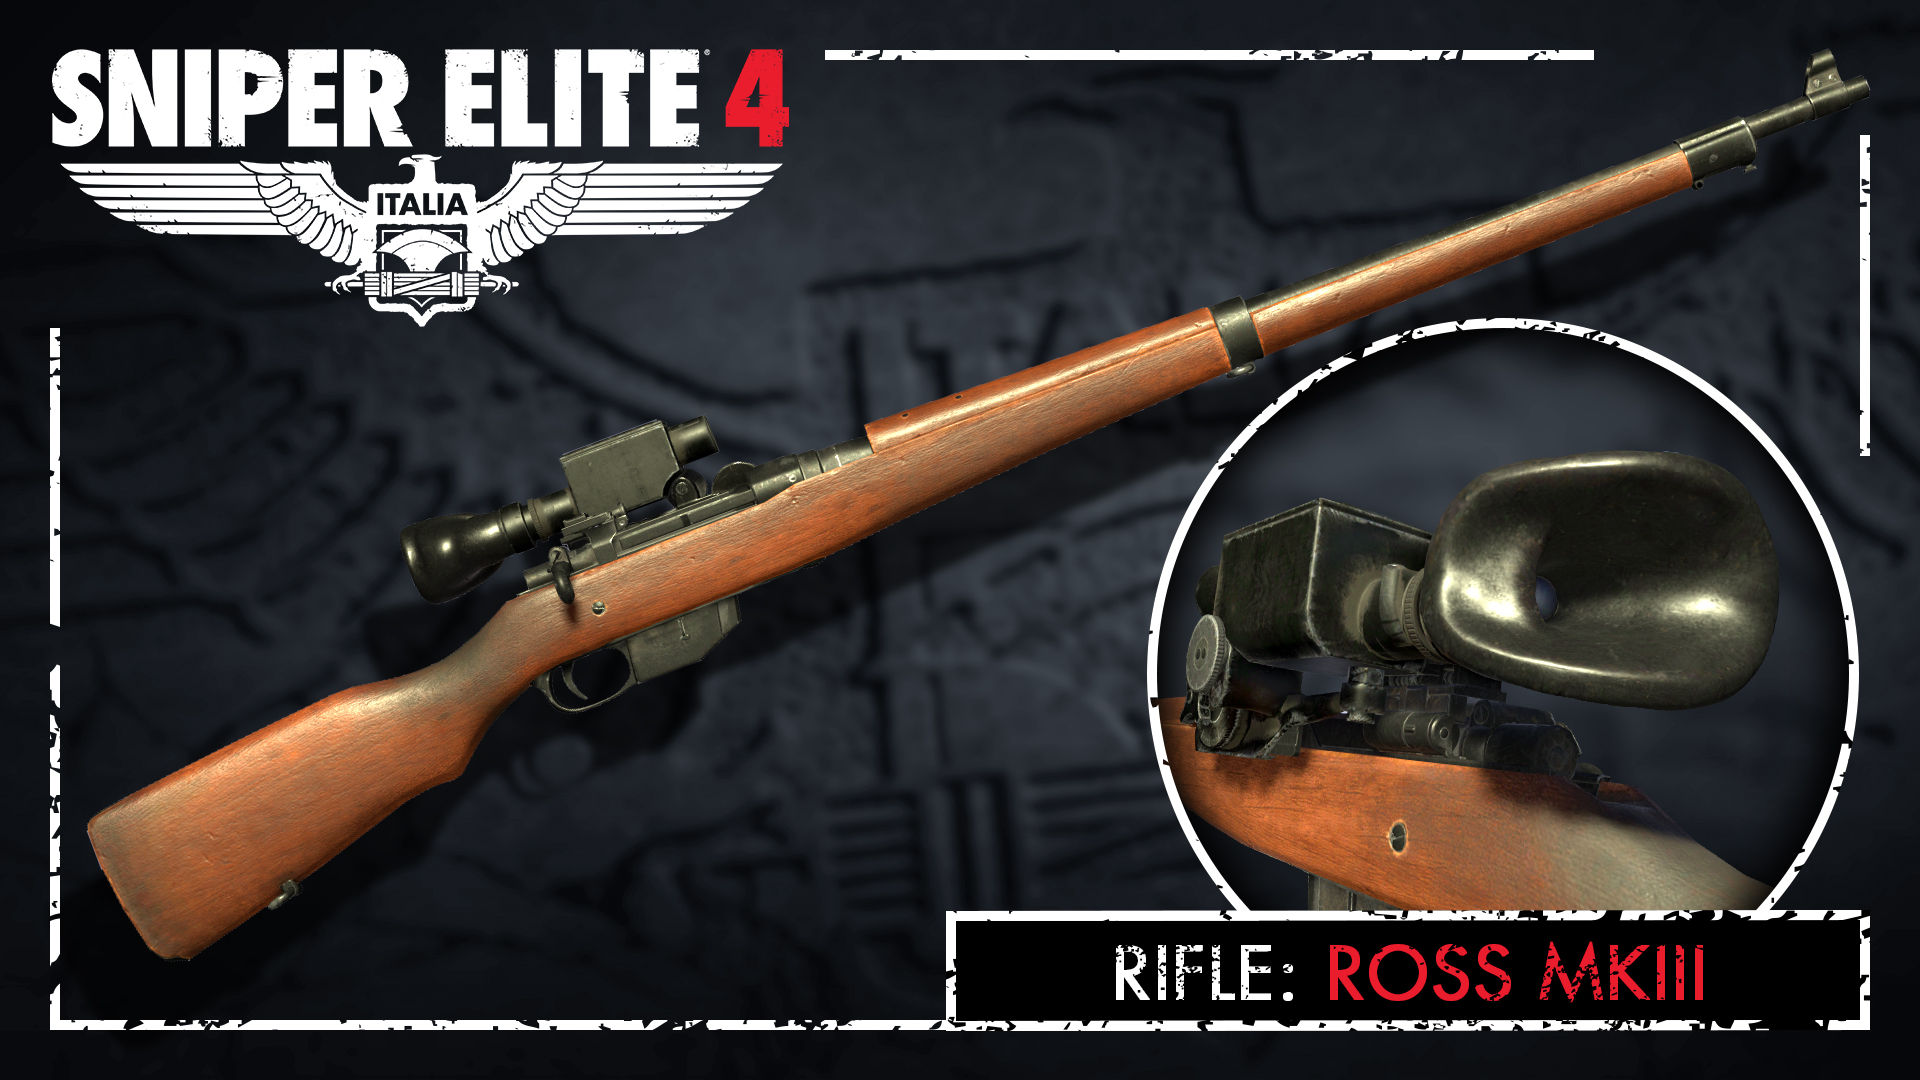 Sniper Elite 4 - Allied Forces Rifle Pack screenshot